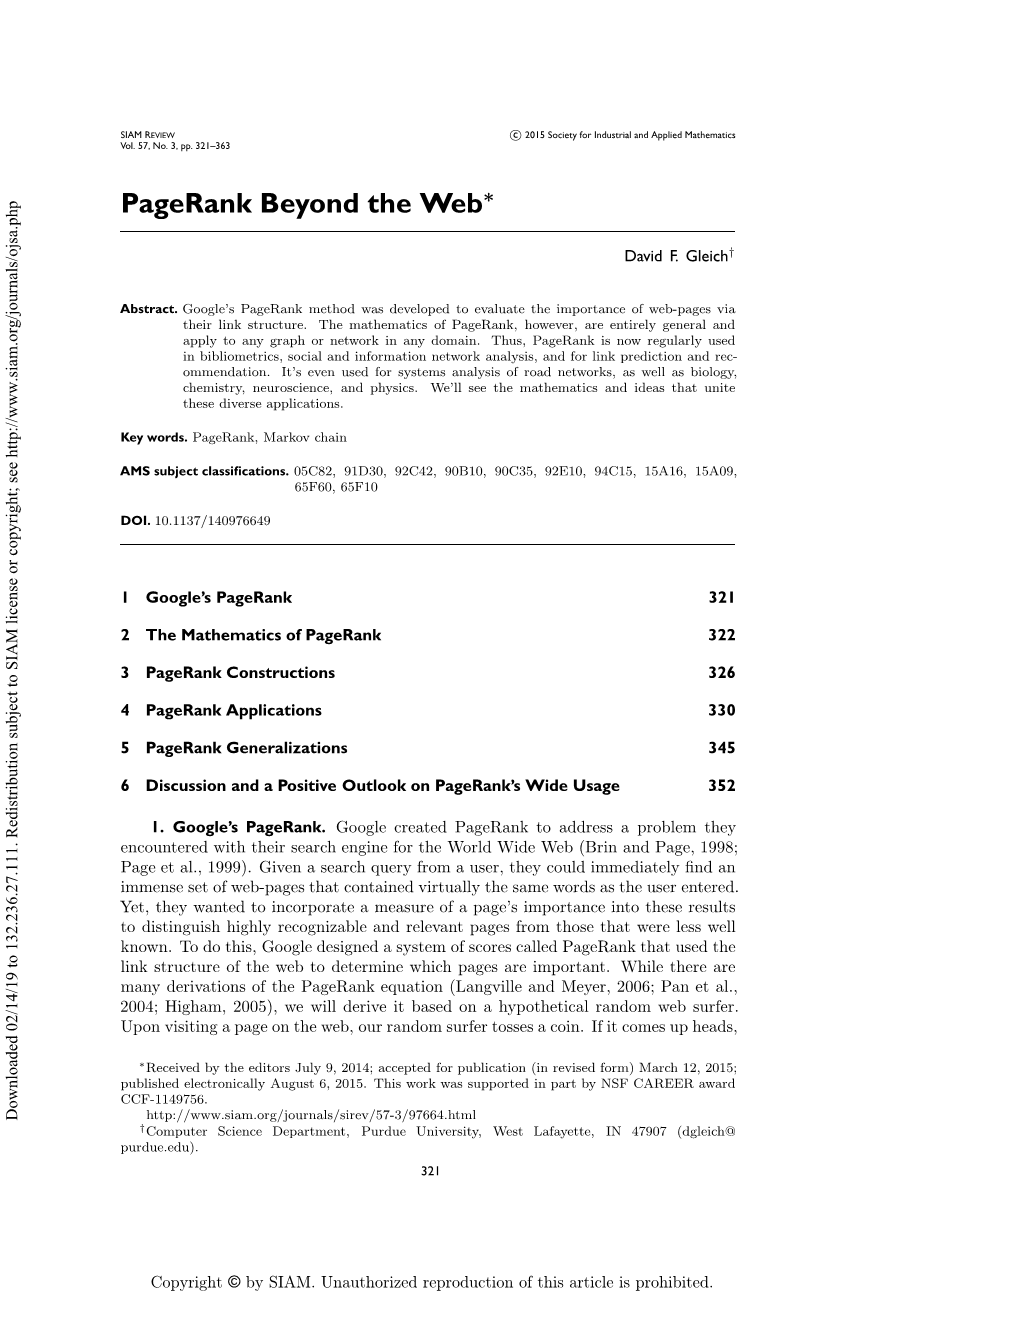 Pagerank Beyond the Web